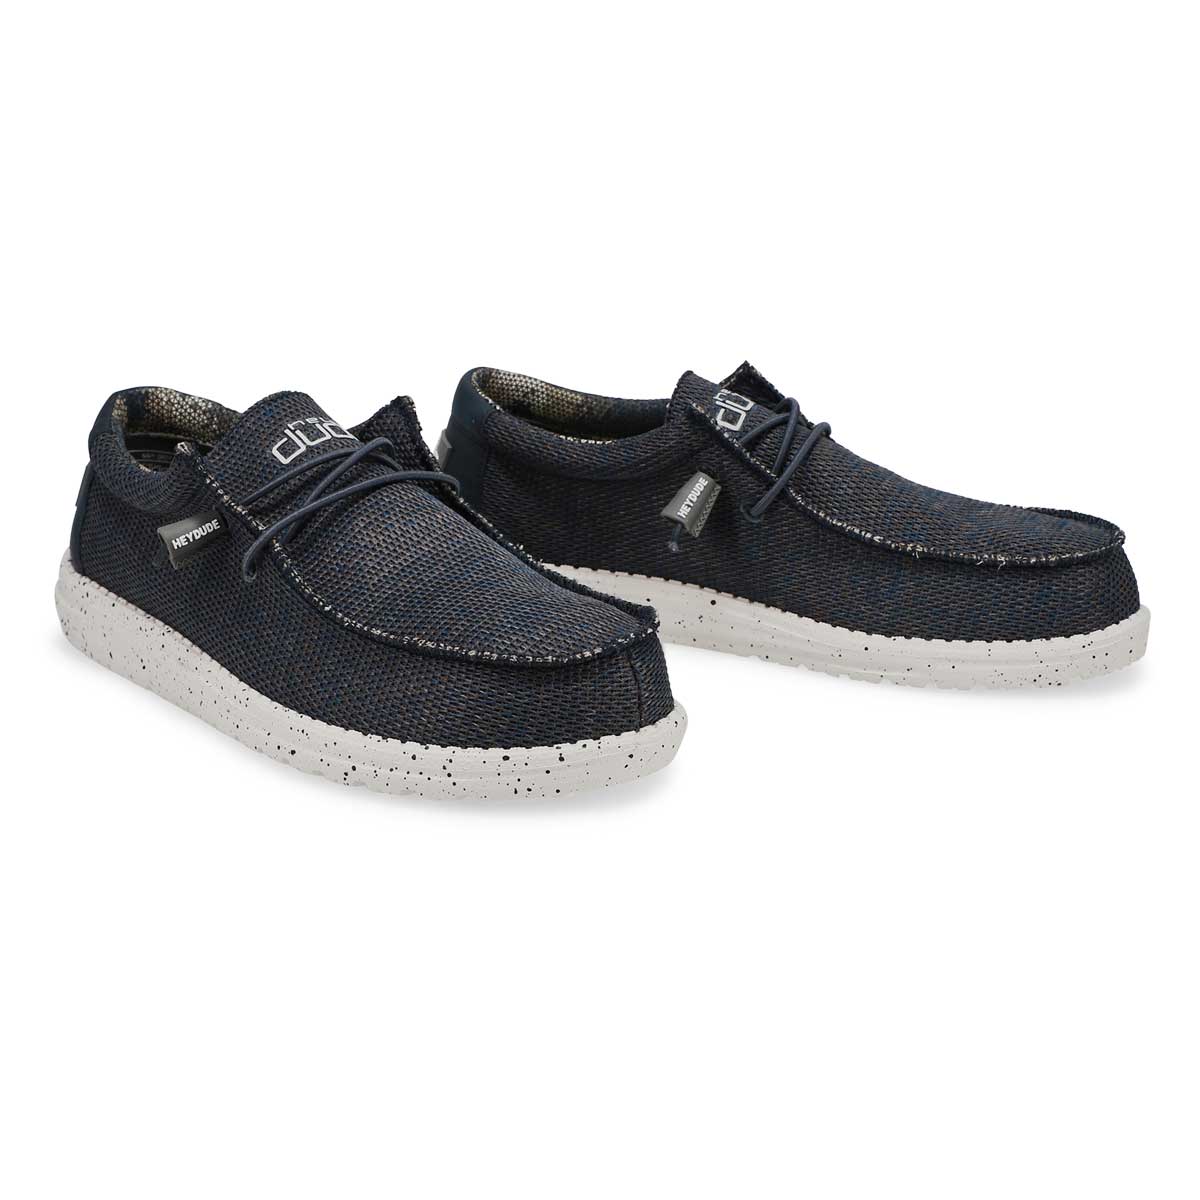 Men's Wally Sox Casual Shoe - Navy/Grey